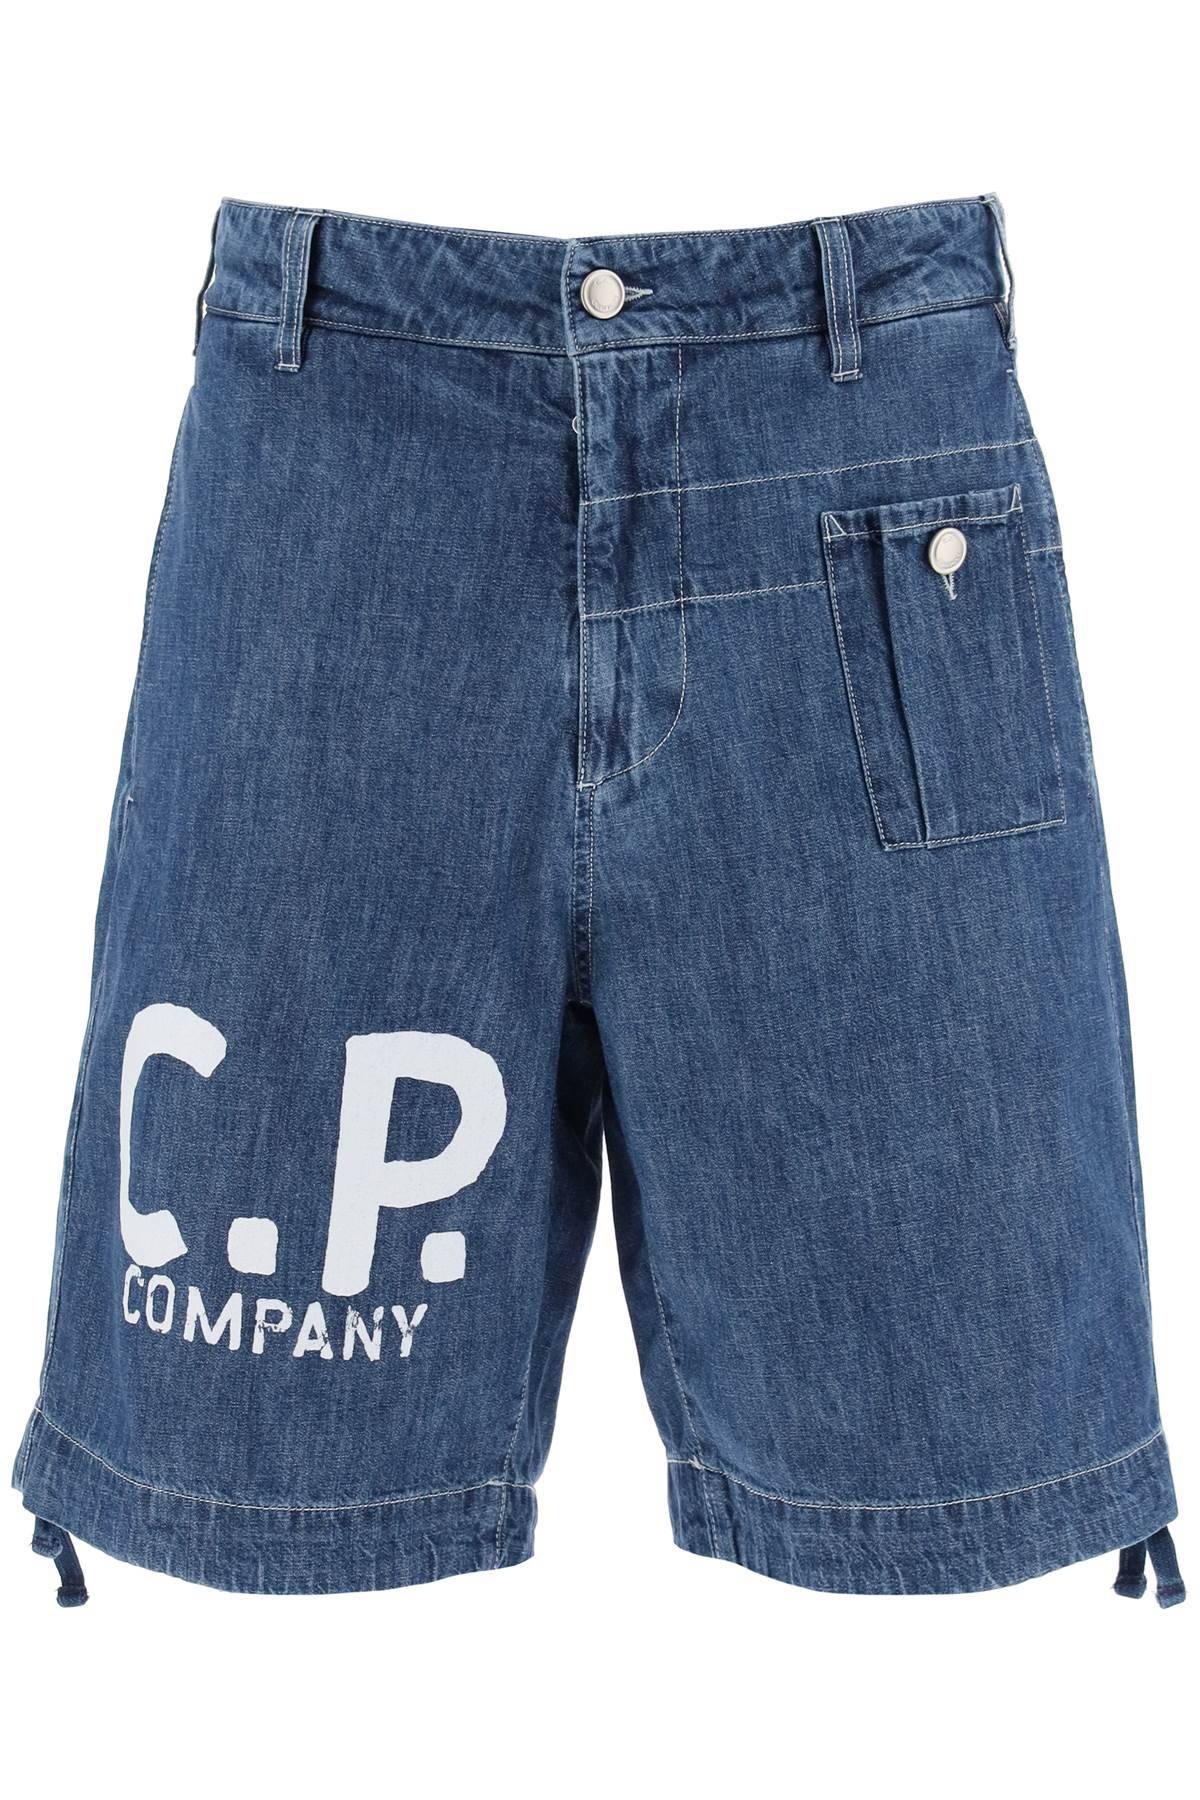 CP COMPANY CP COMPANY denim utility bermuda shorts for